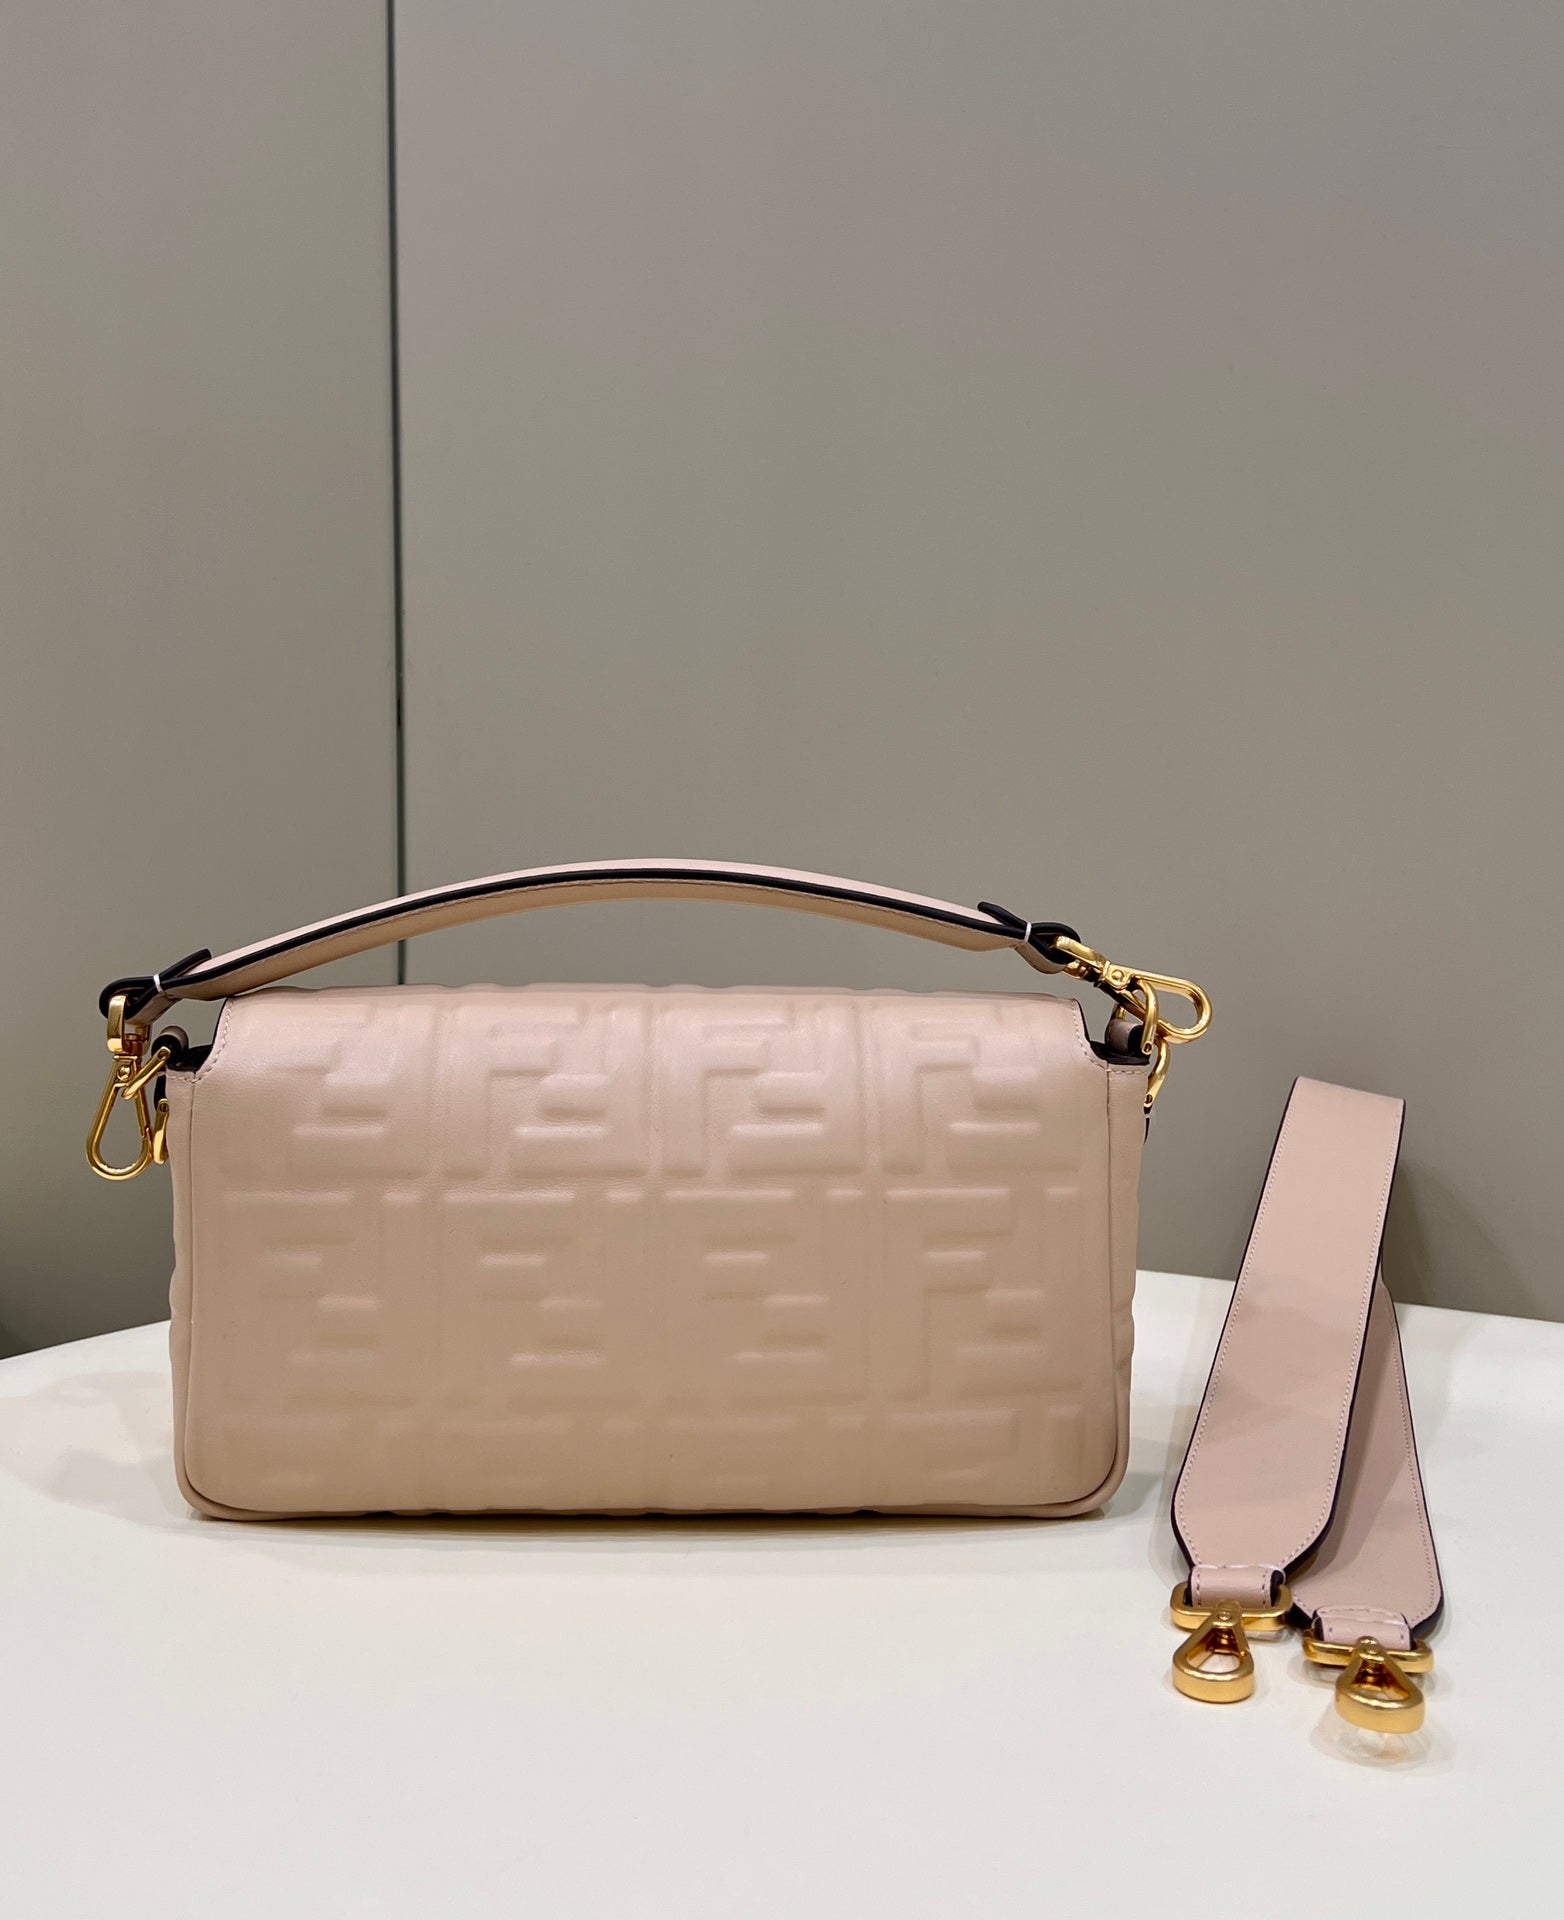 fendi-8br600-baguette-medium-light-pink-leather-0135m-bag002-luxibags.ru